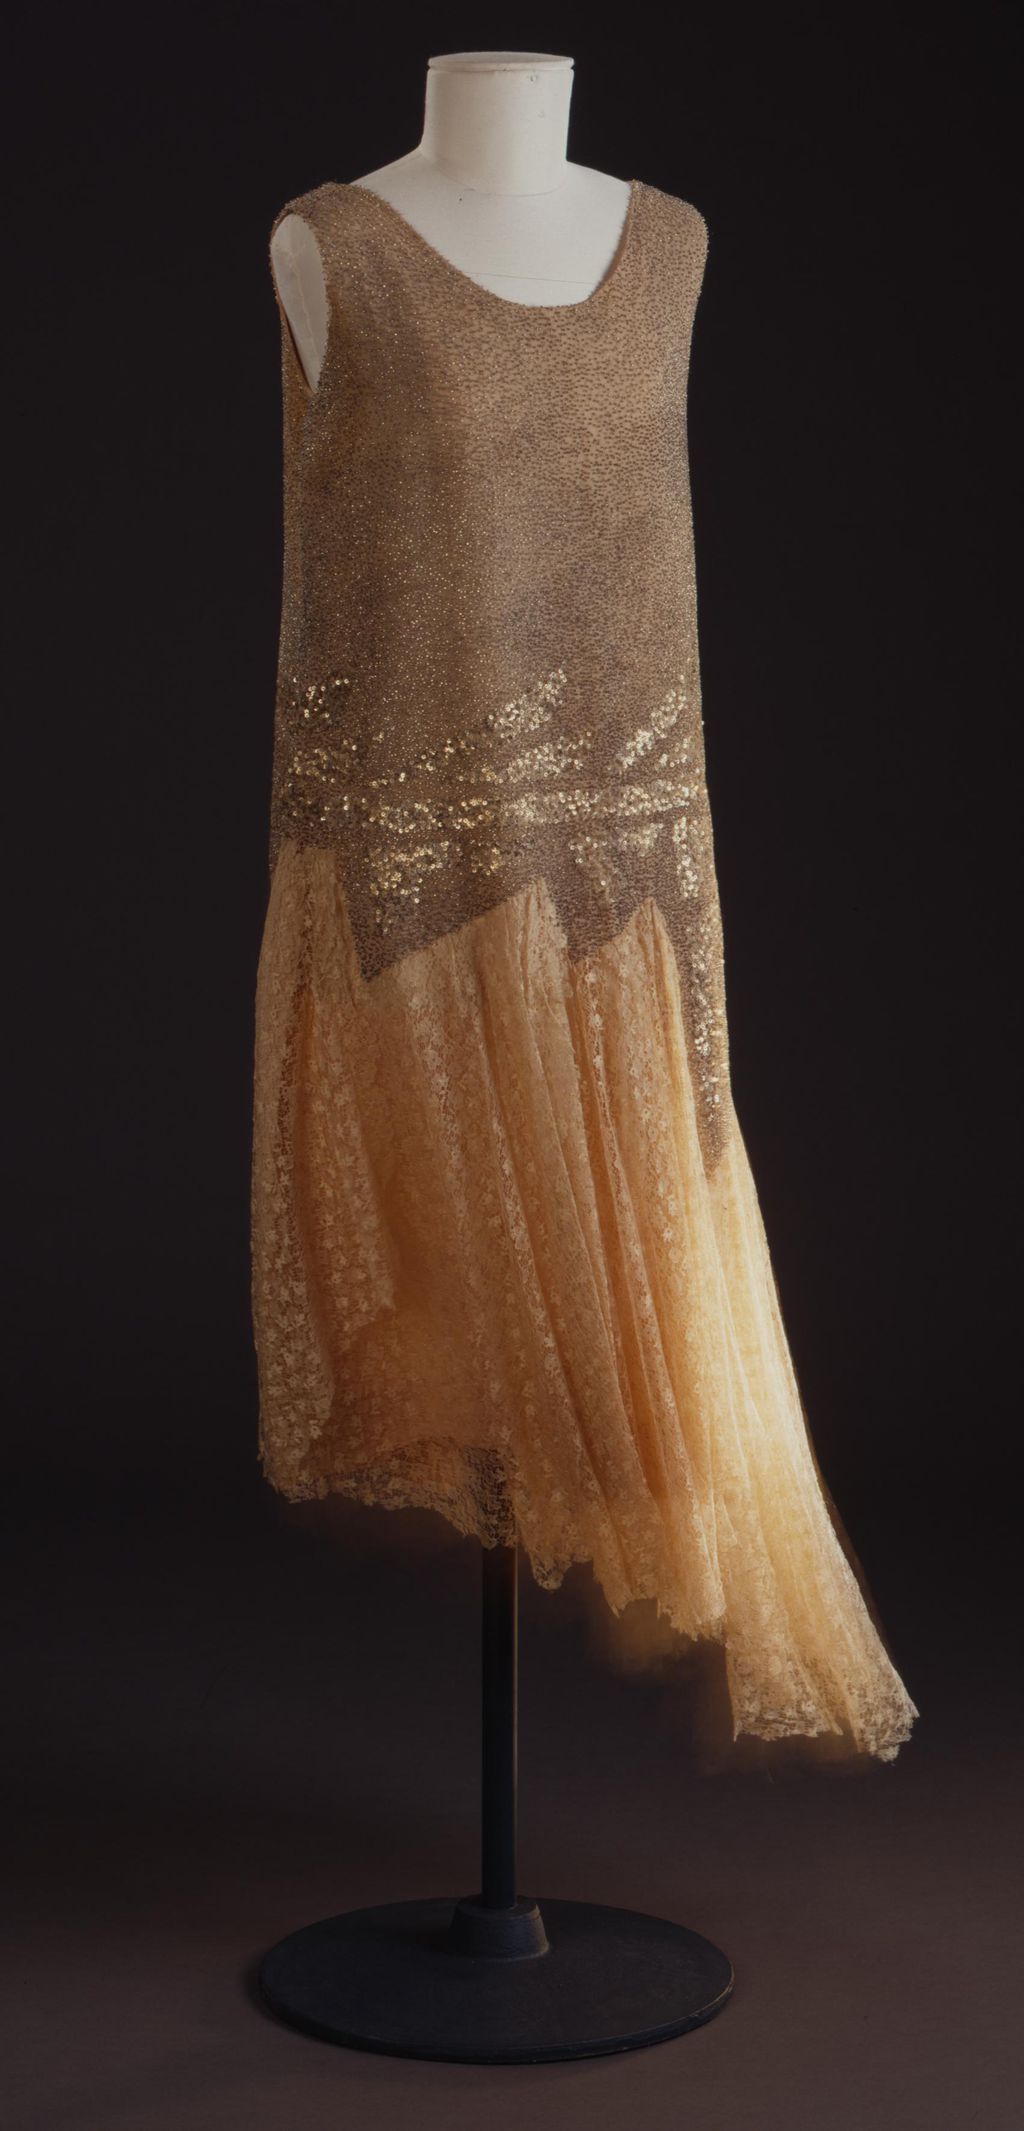 Bekleidung: Charleston-Kleid, um 1926